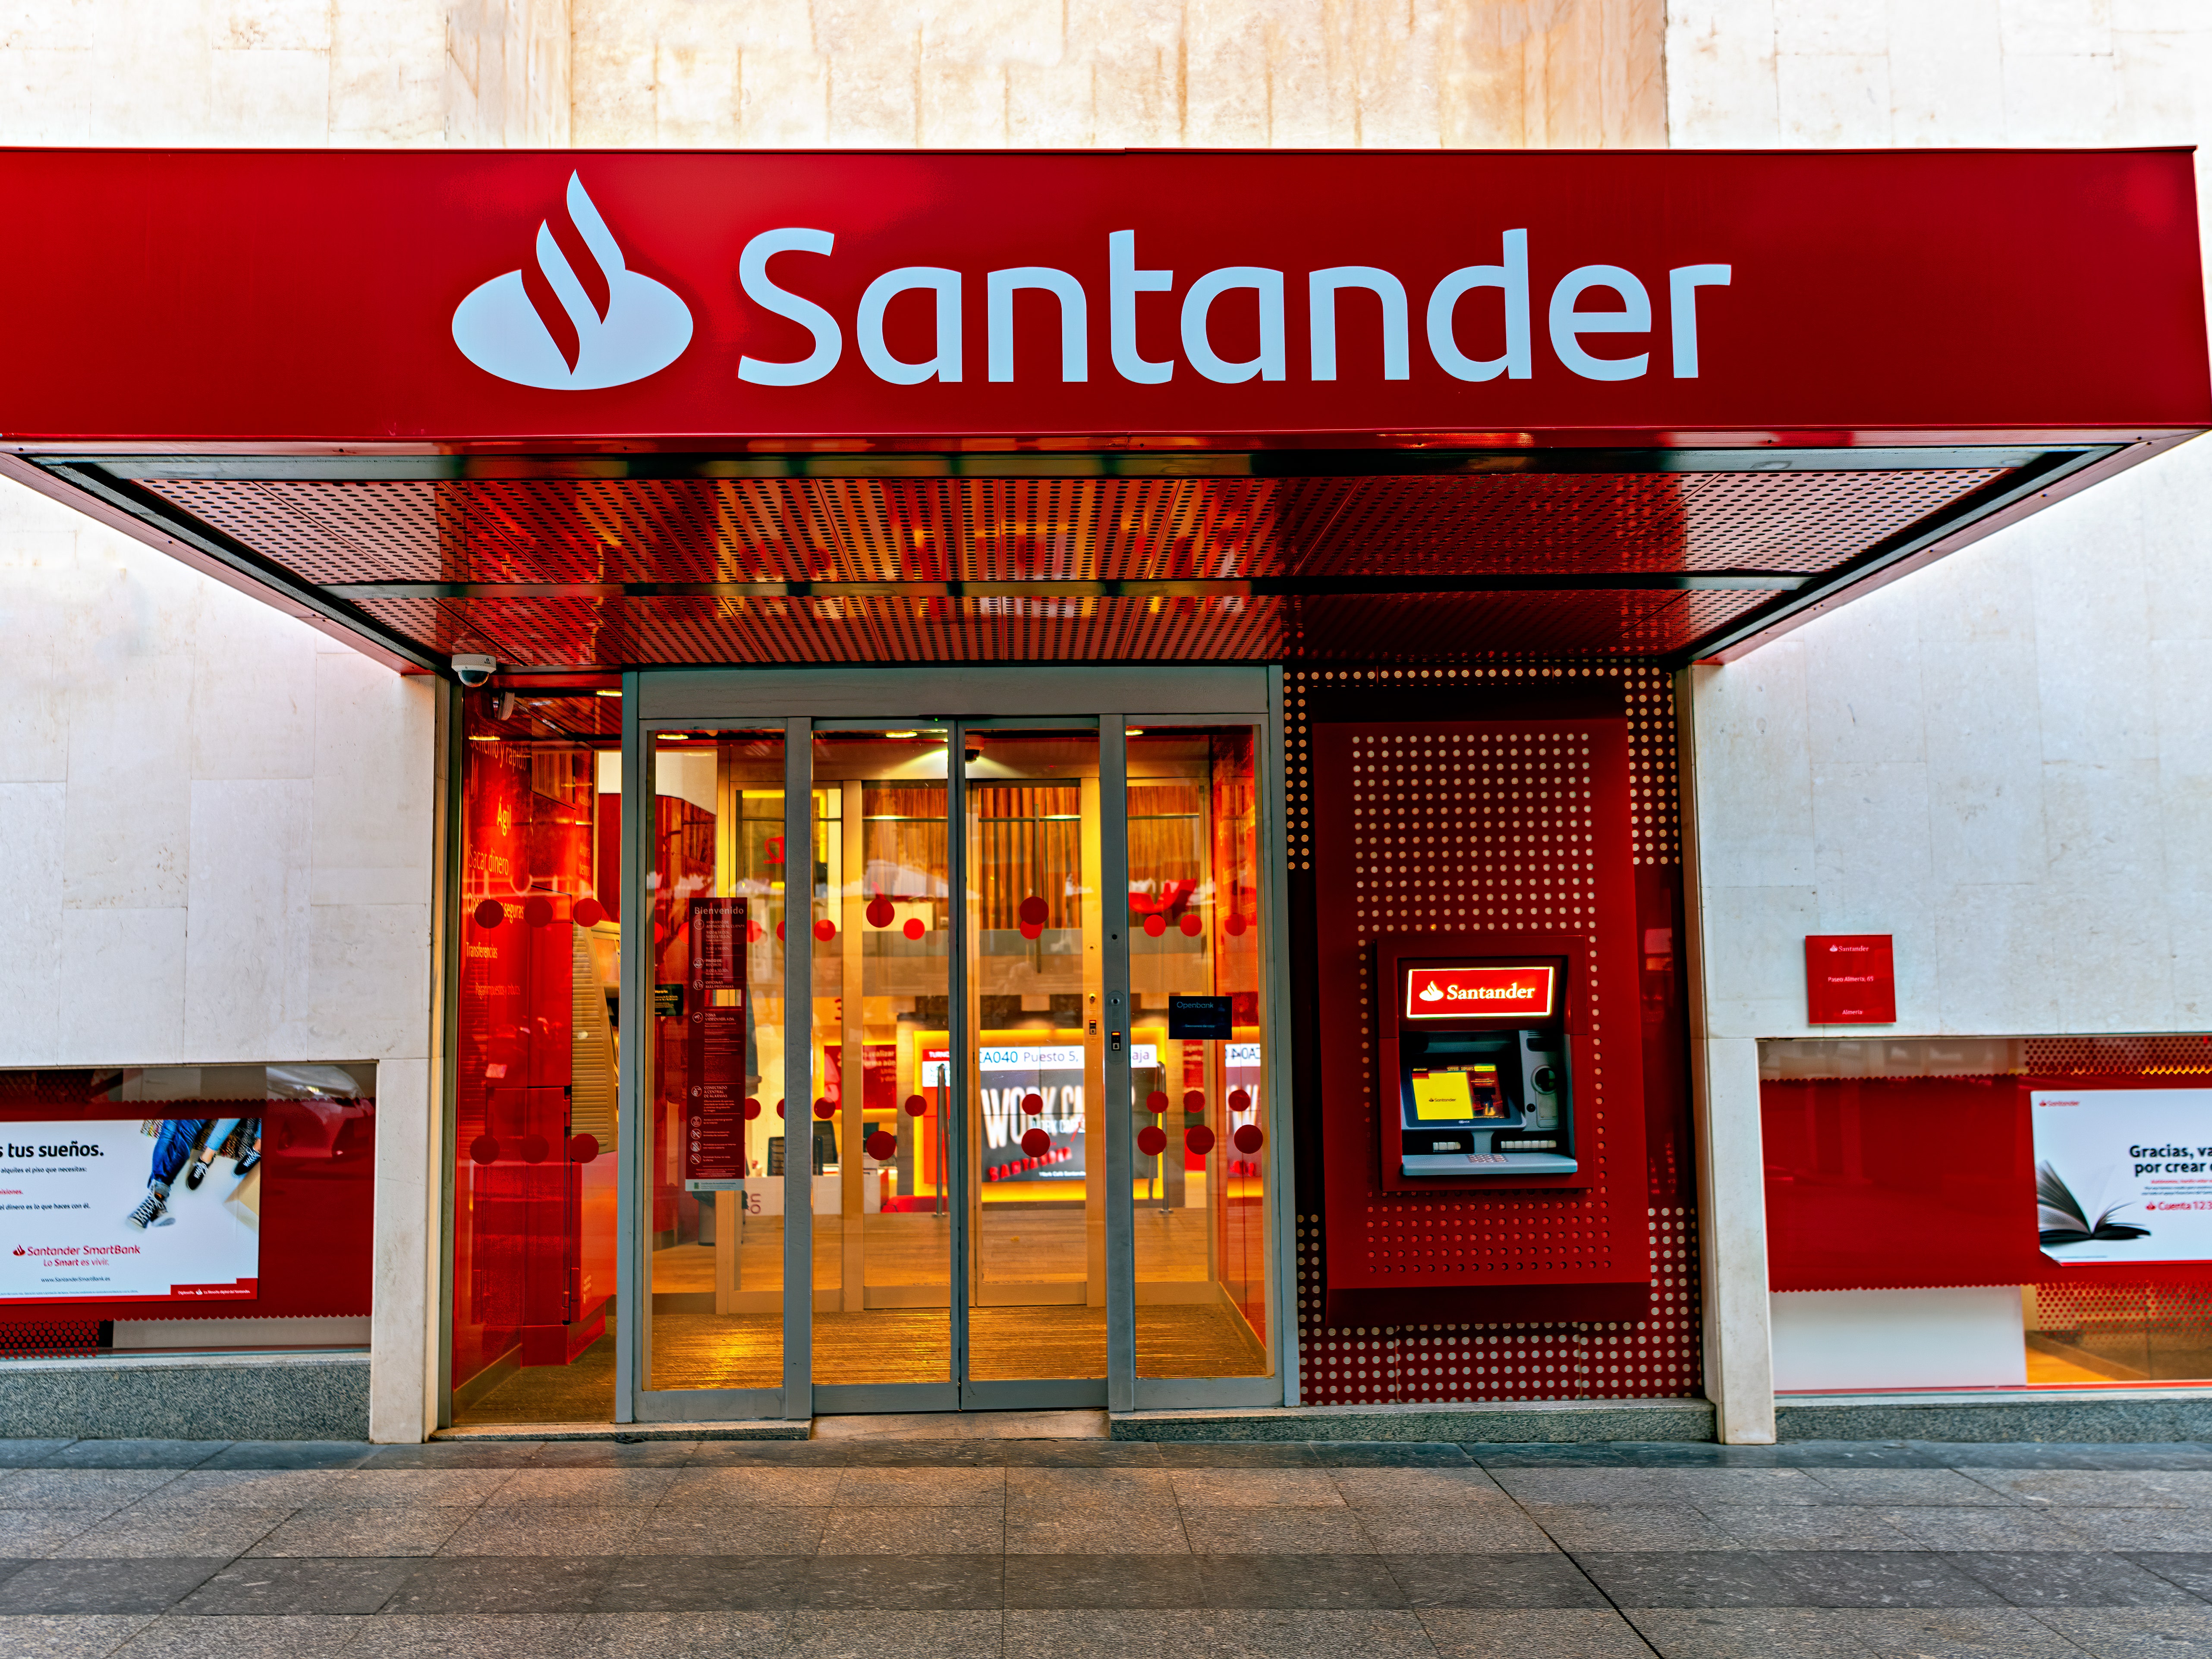 Banco Santander Totta, S.A - Crunchbase Company Profile & Funding